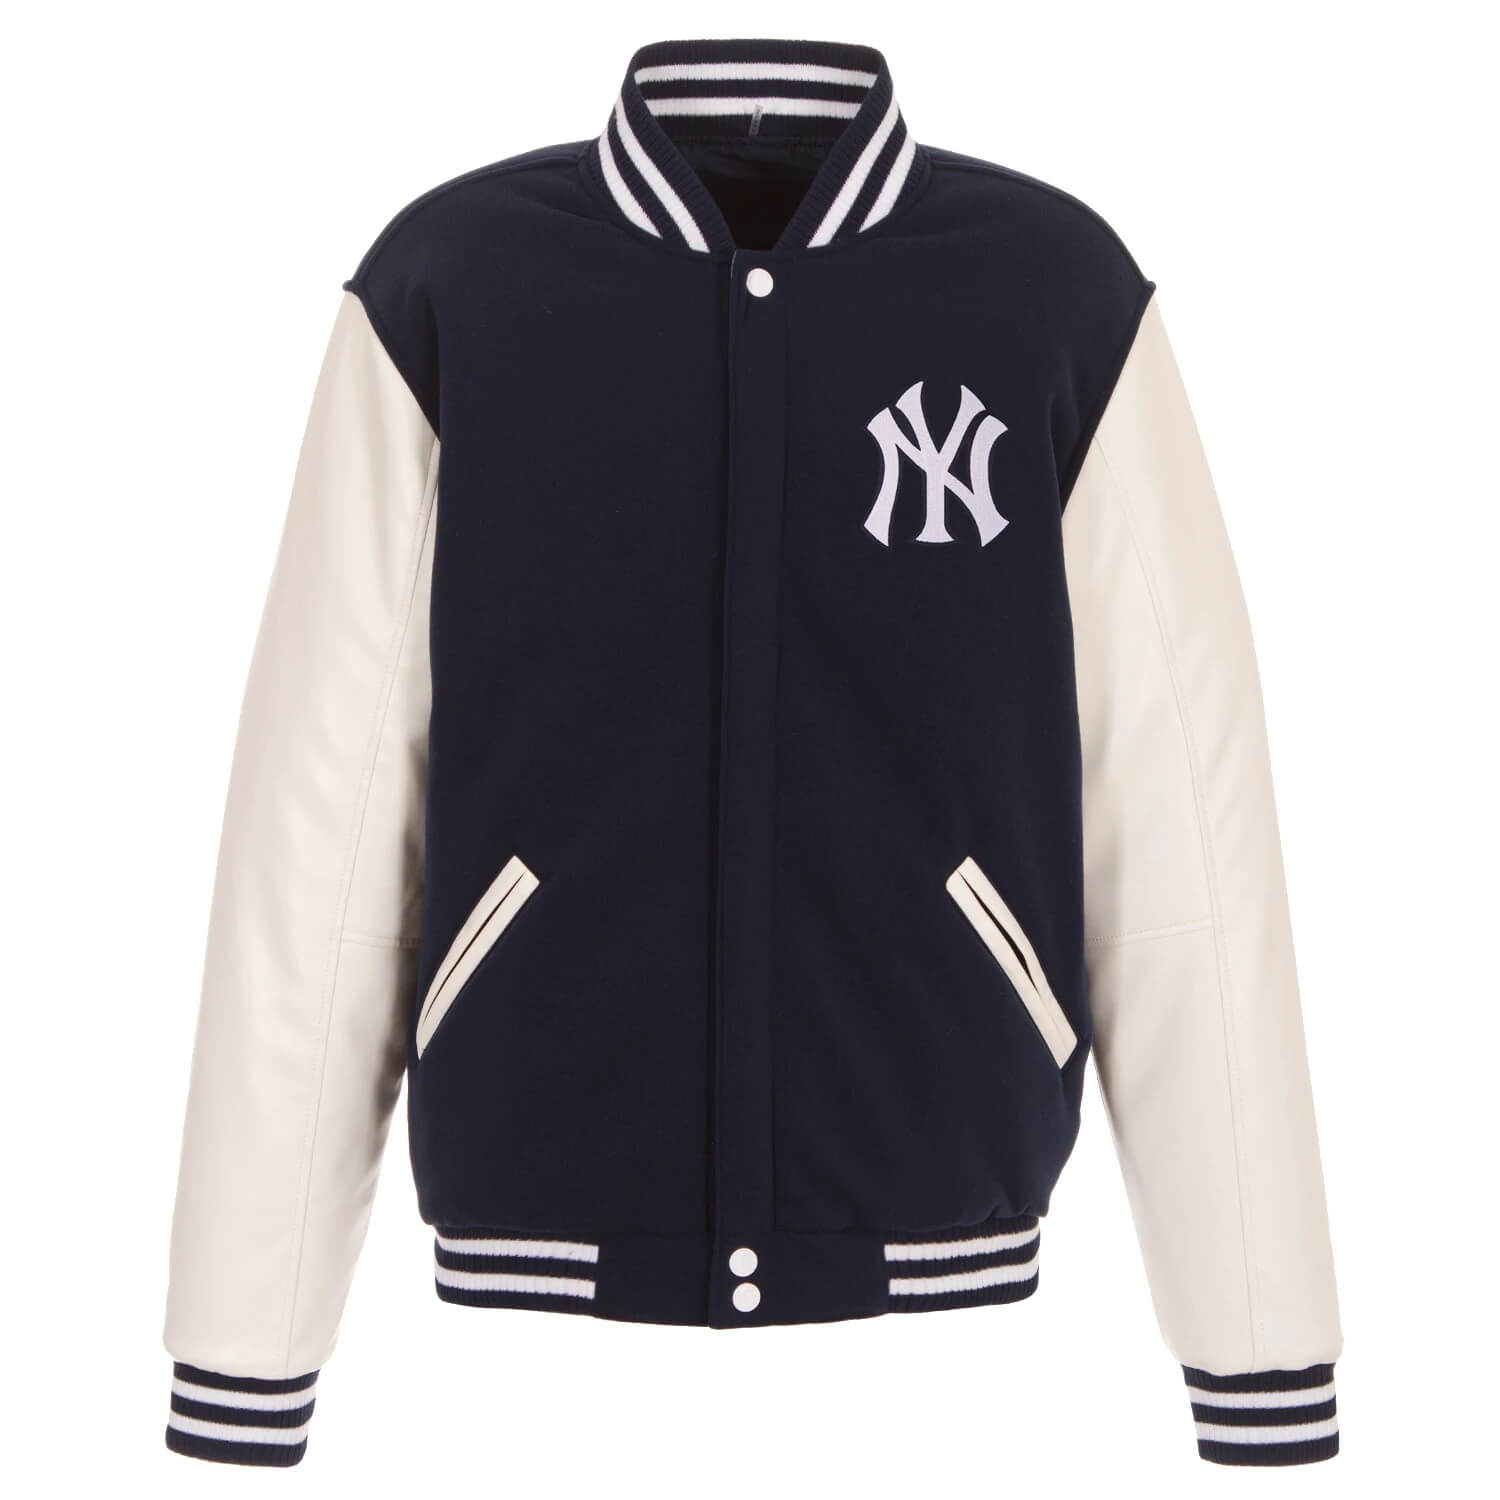 Buy MLB New York Yankees Varsity Baseball Jacket Online in India